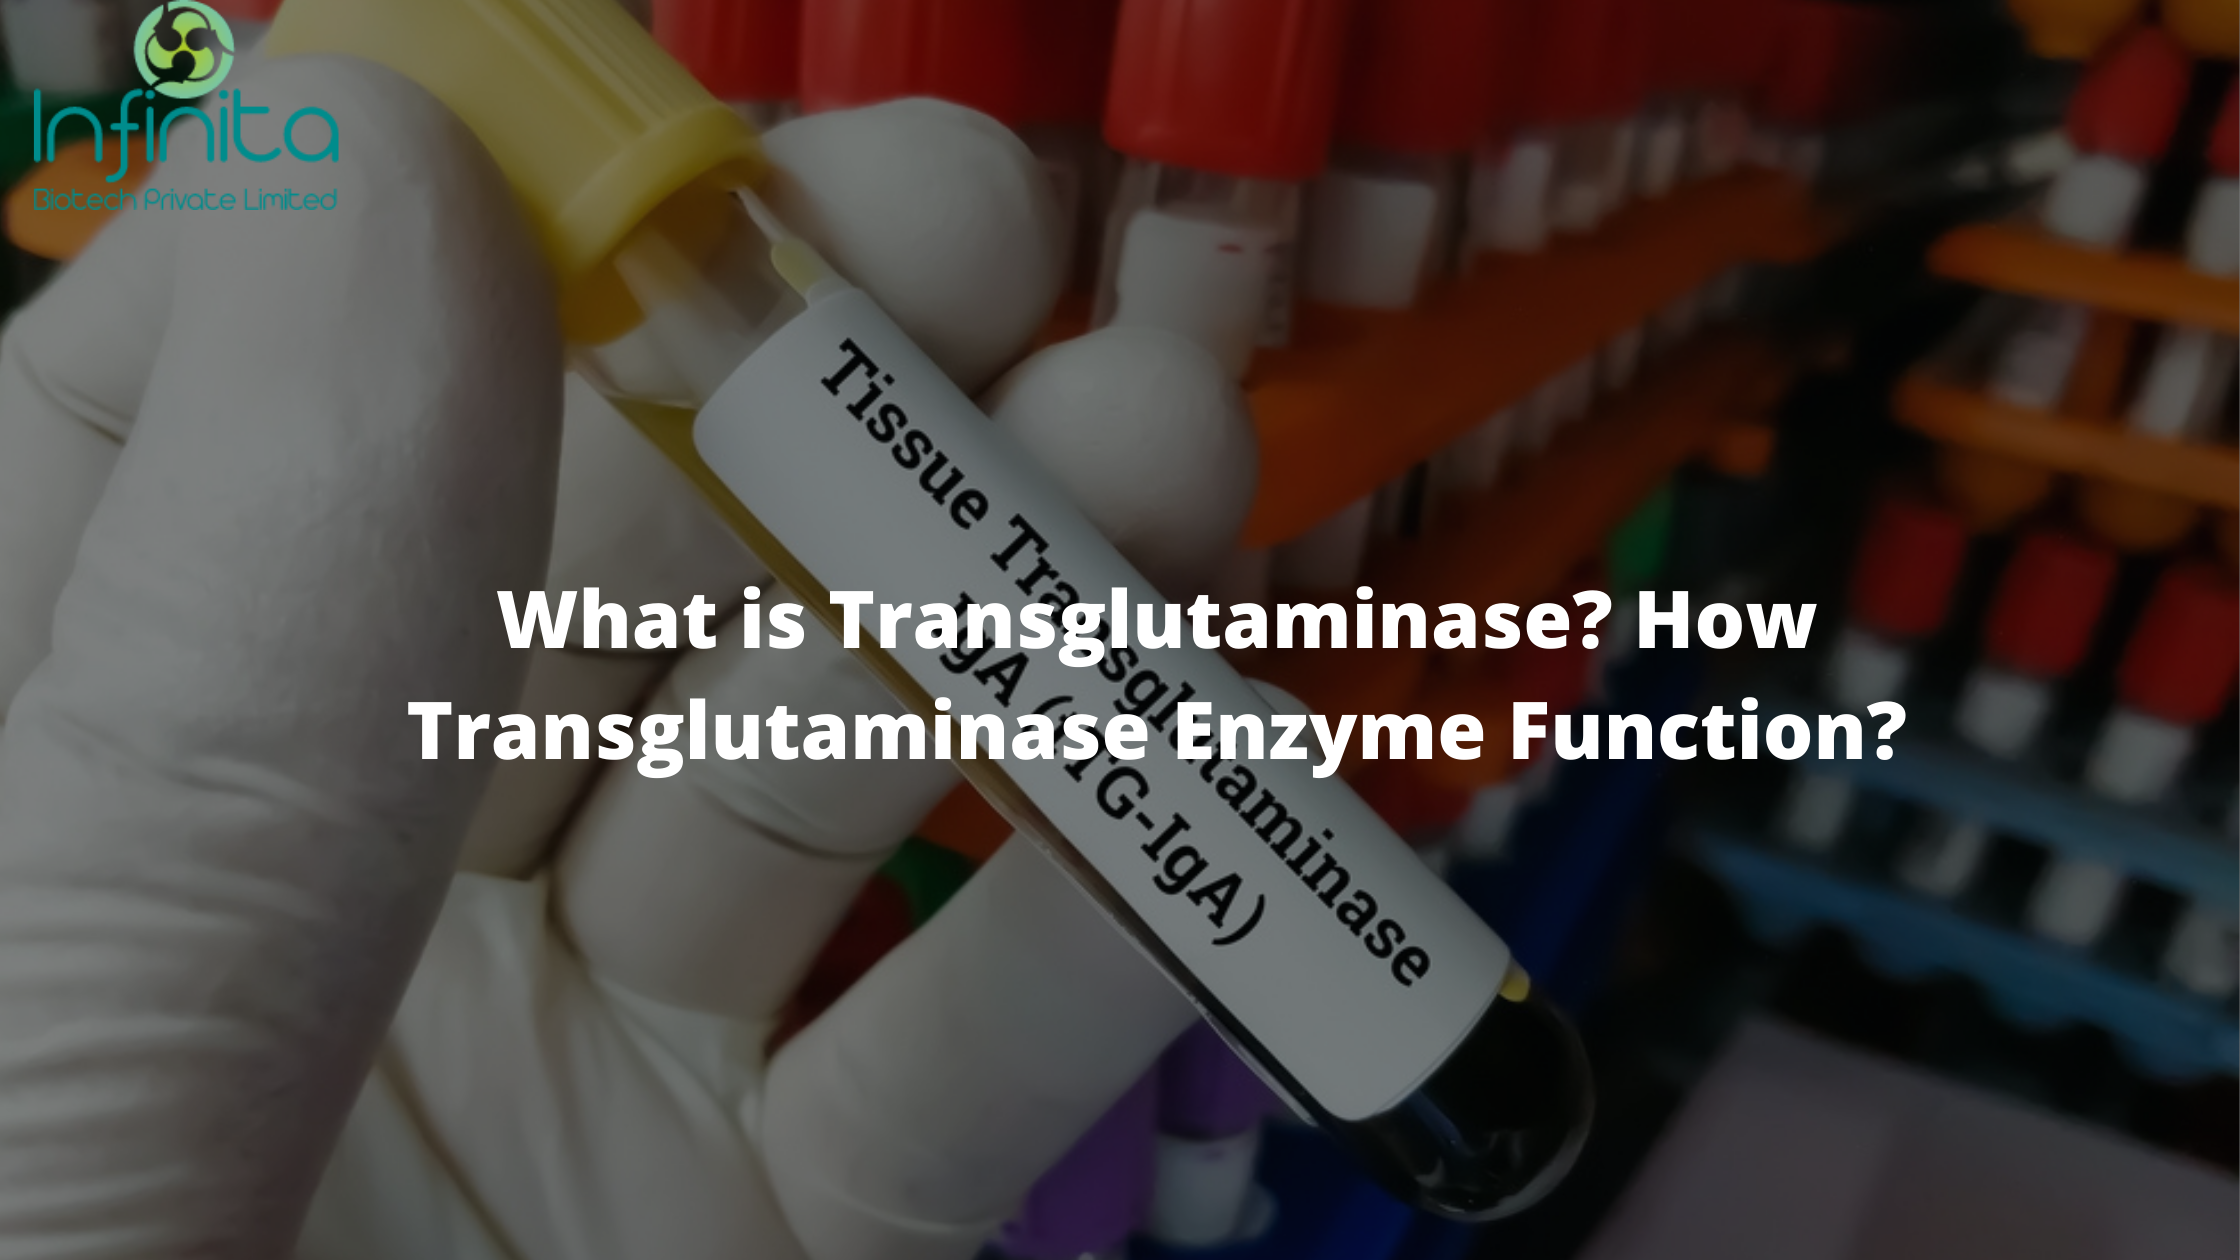 Transglutaminase enzyme